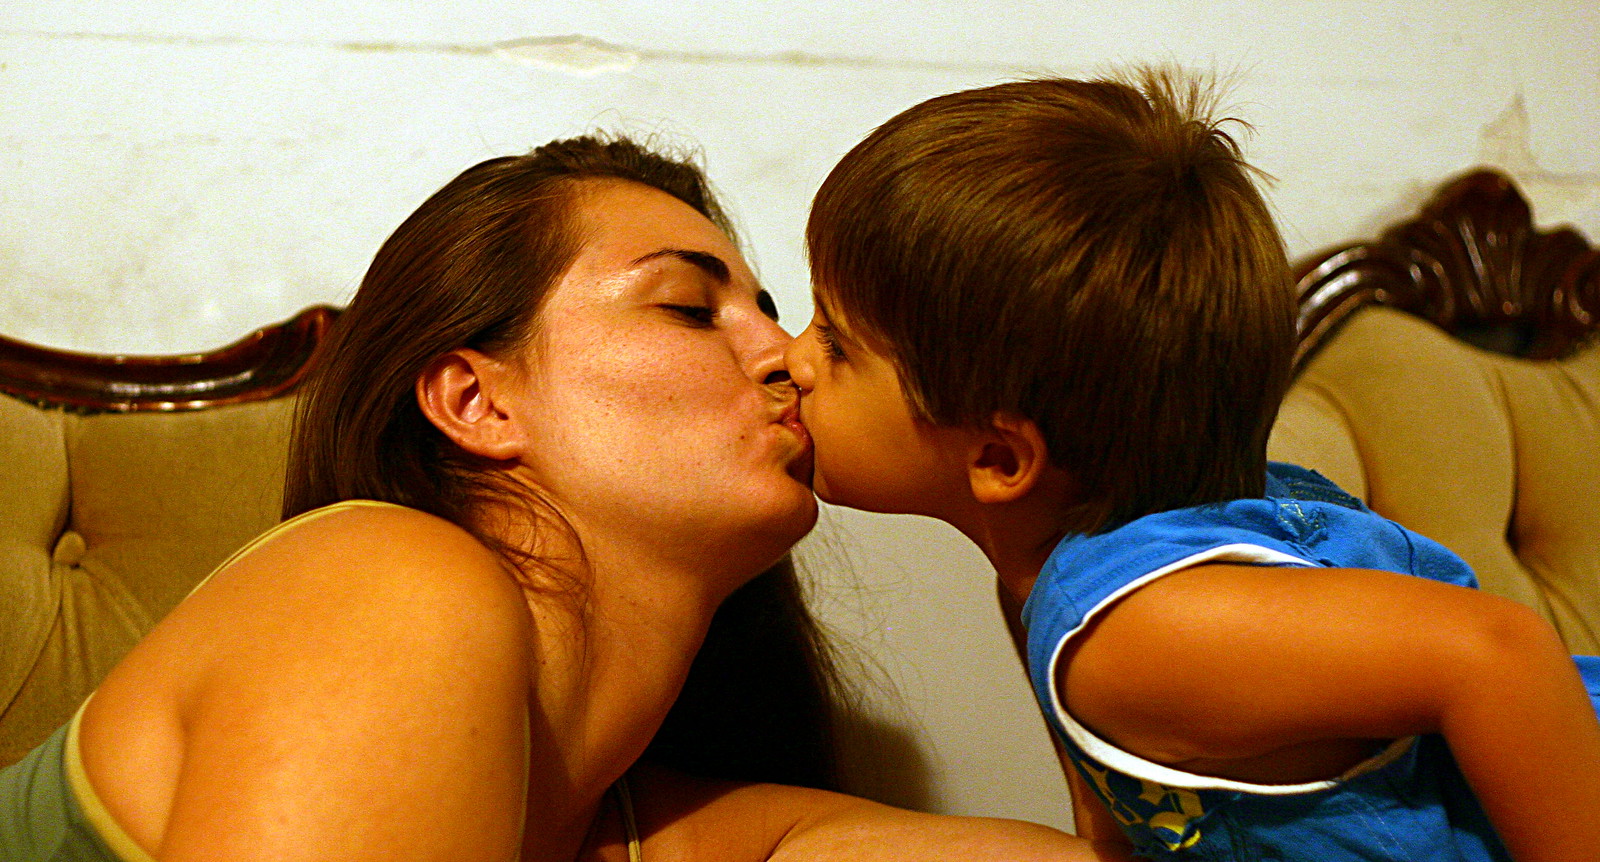 French sisters. Поцелуй сына. Поцелуй женщины и мальчика. Женщина целует ребенка в губы. Мальчик целует маму в губы.